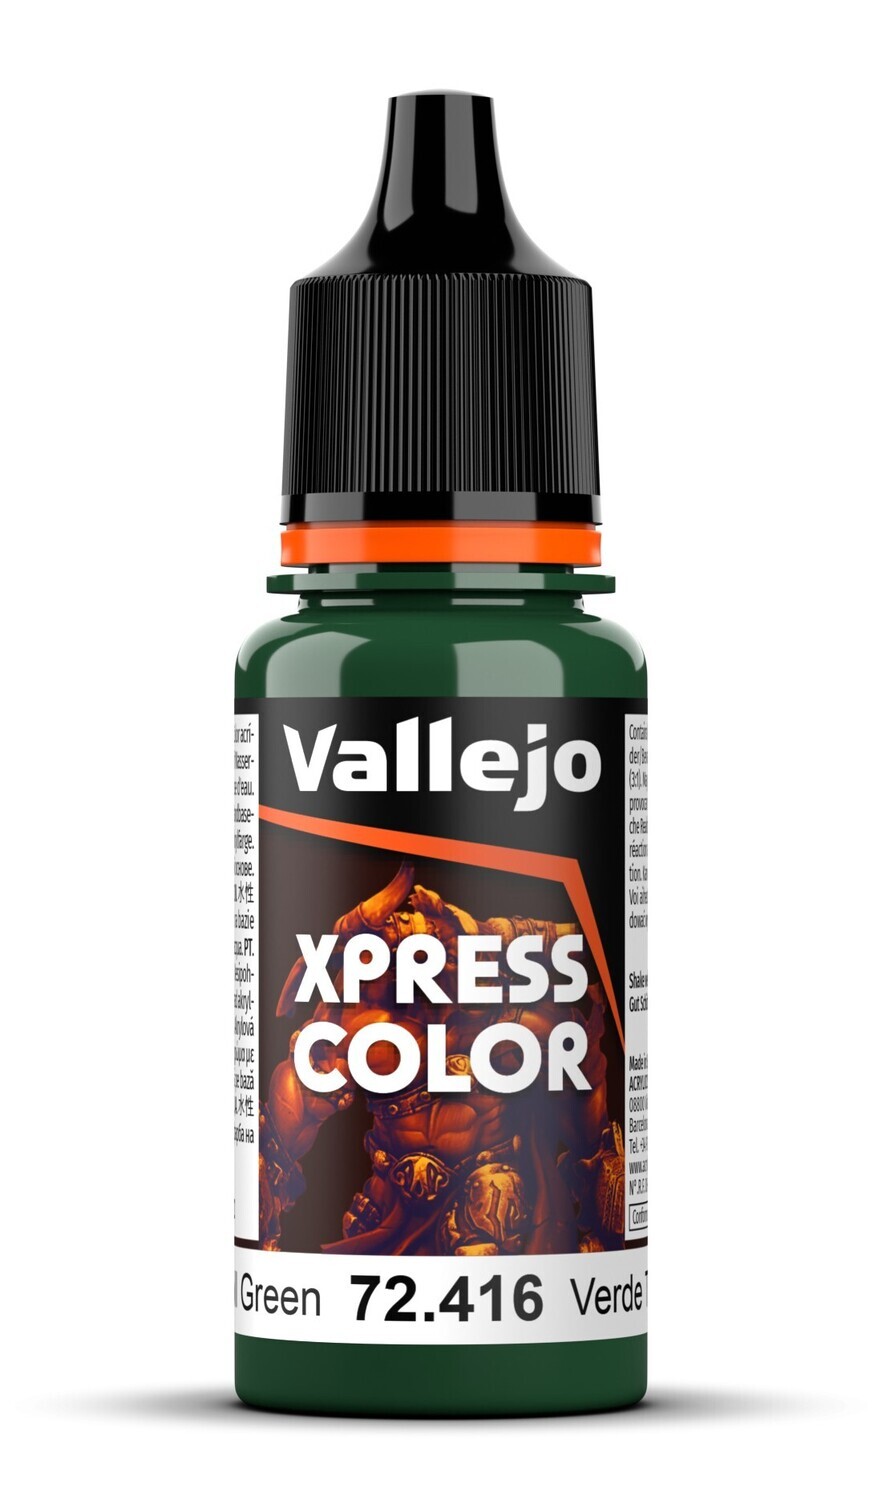 Troll Green 18 ml - Xpress Color - Vallejo